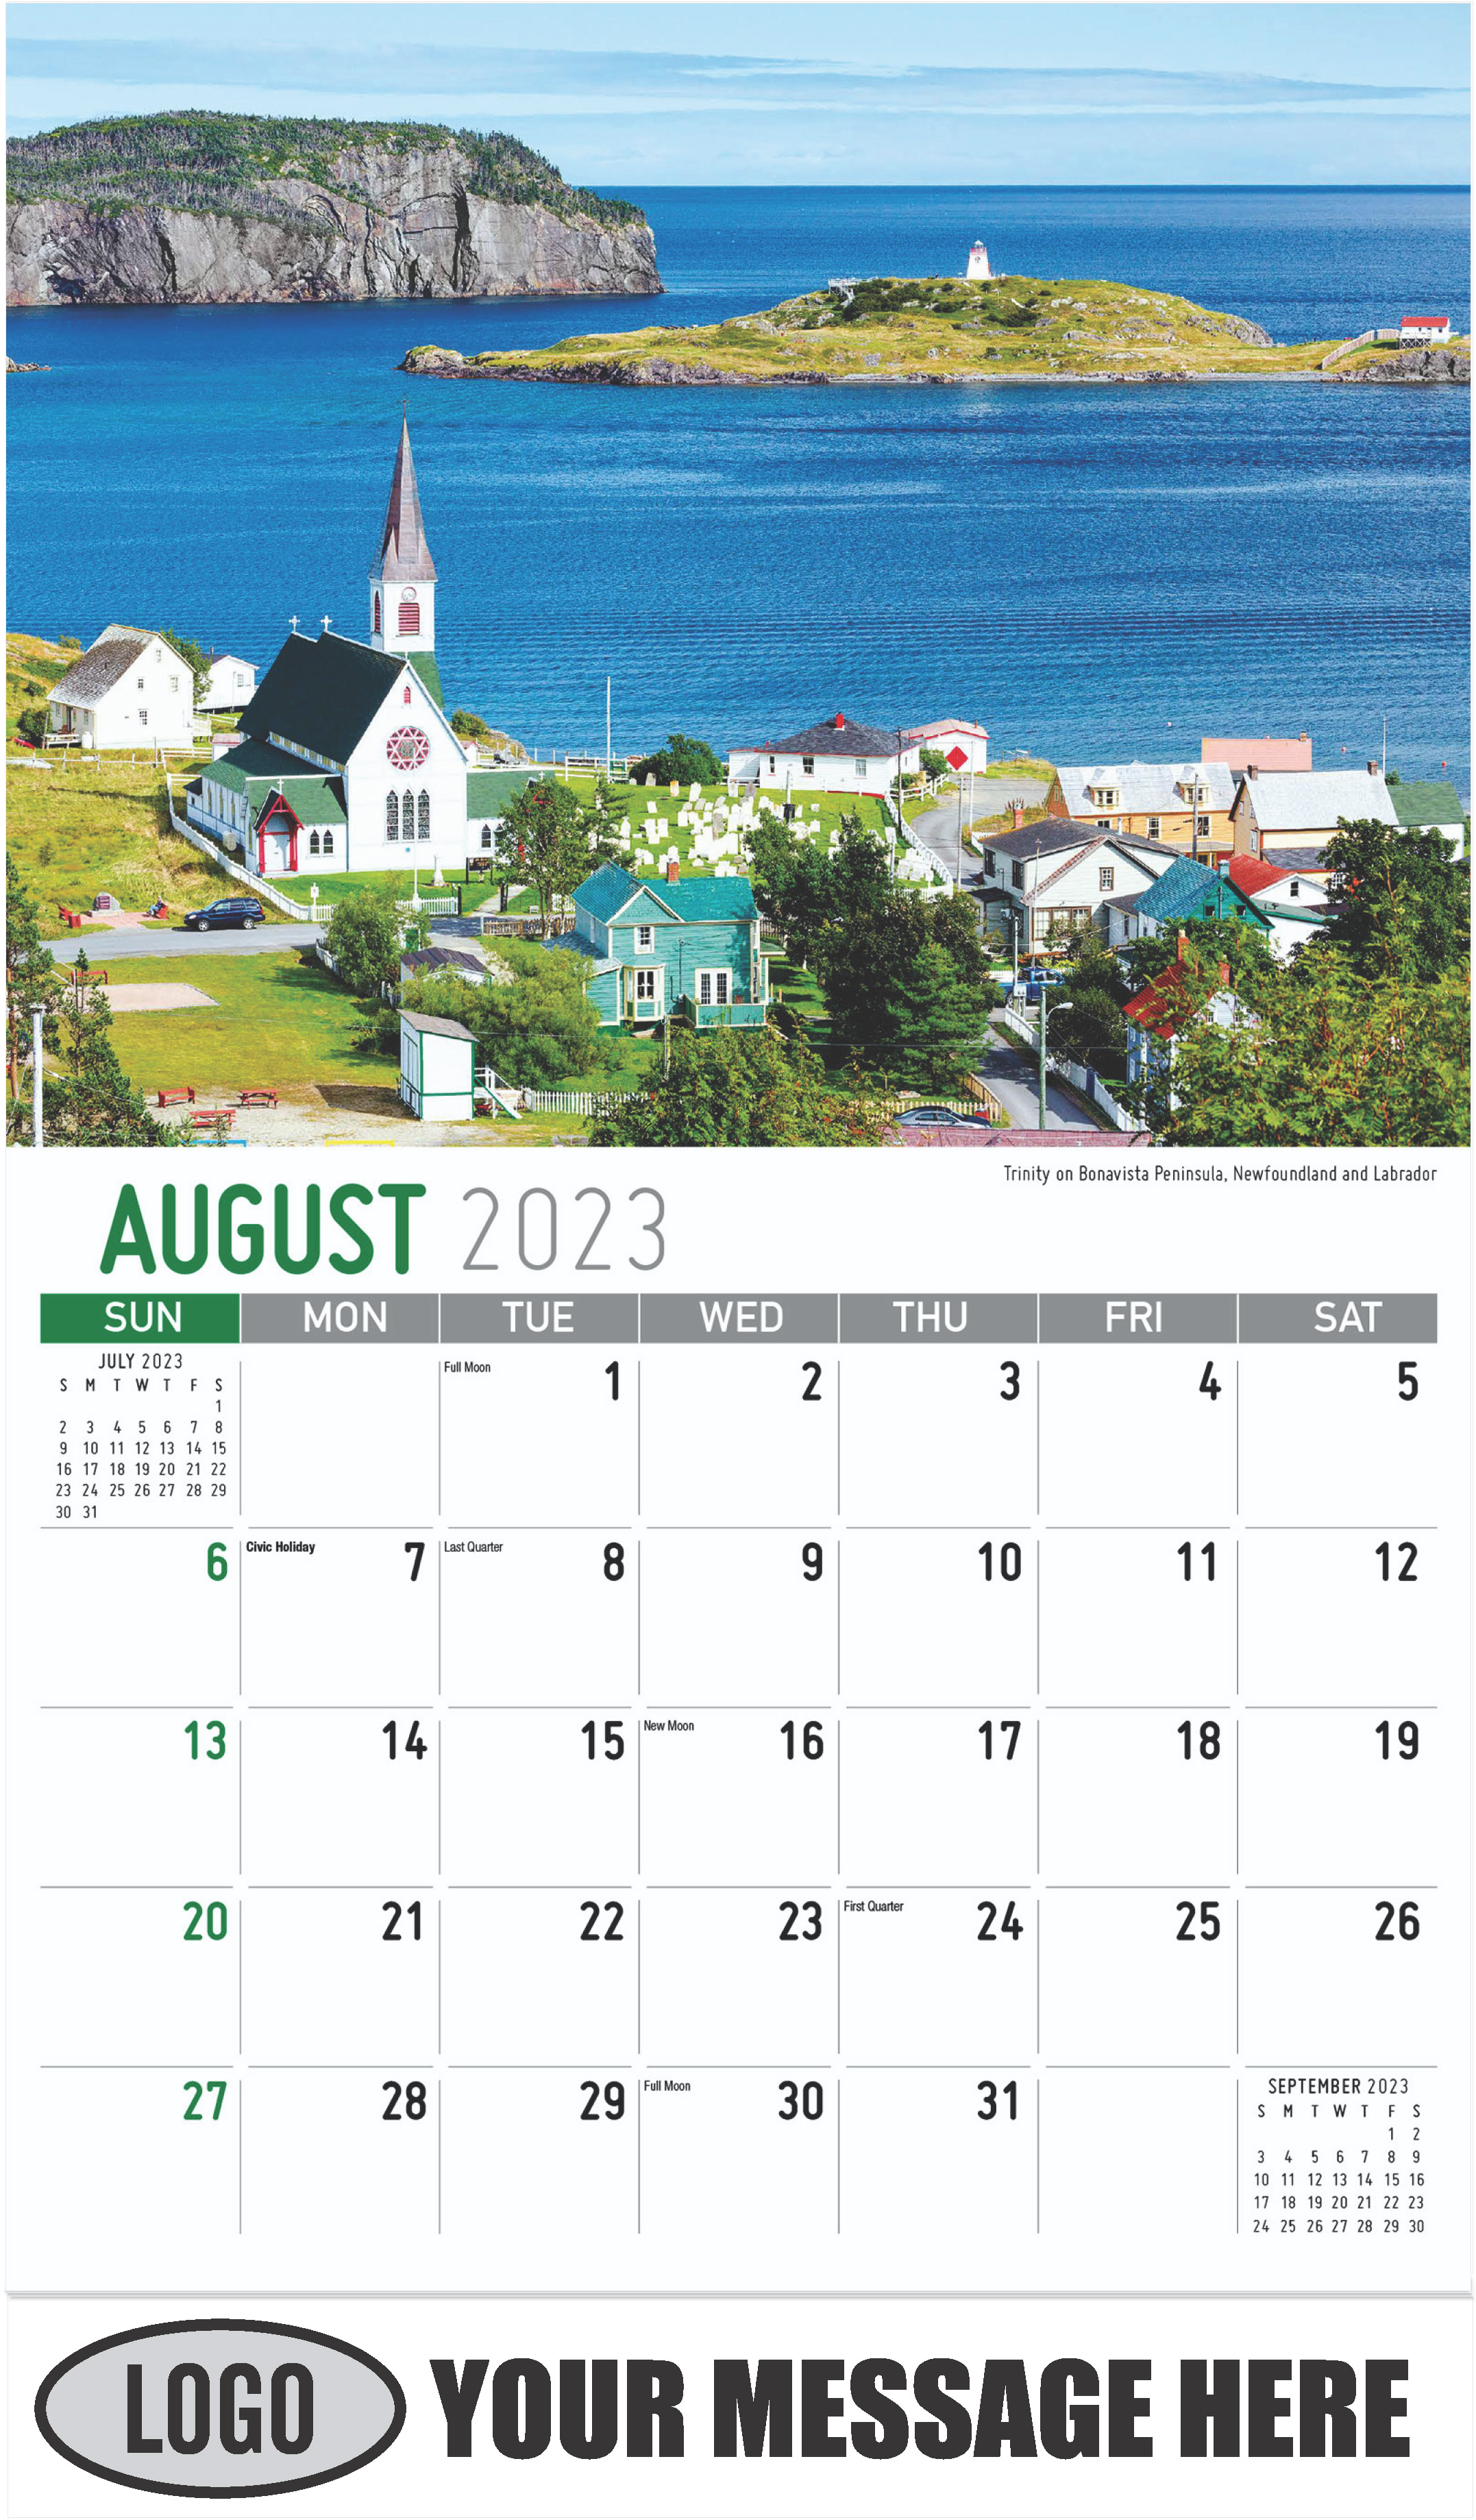 Trinity on Bonavista Peninsula, Newfoundland - August - Atlantic Canada 2023 Promotional Calendar